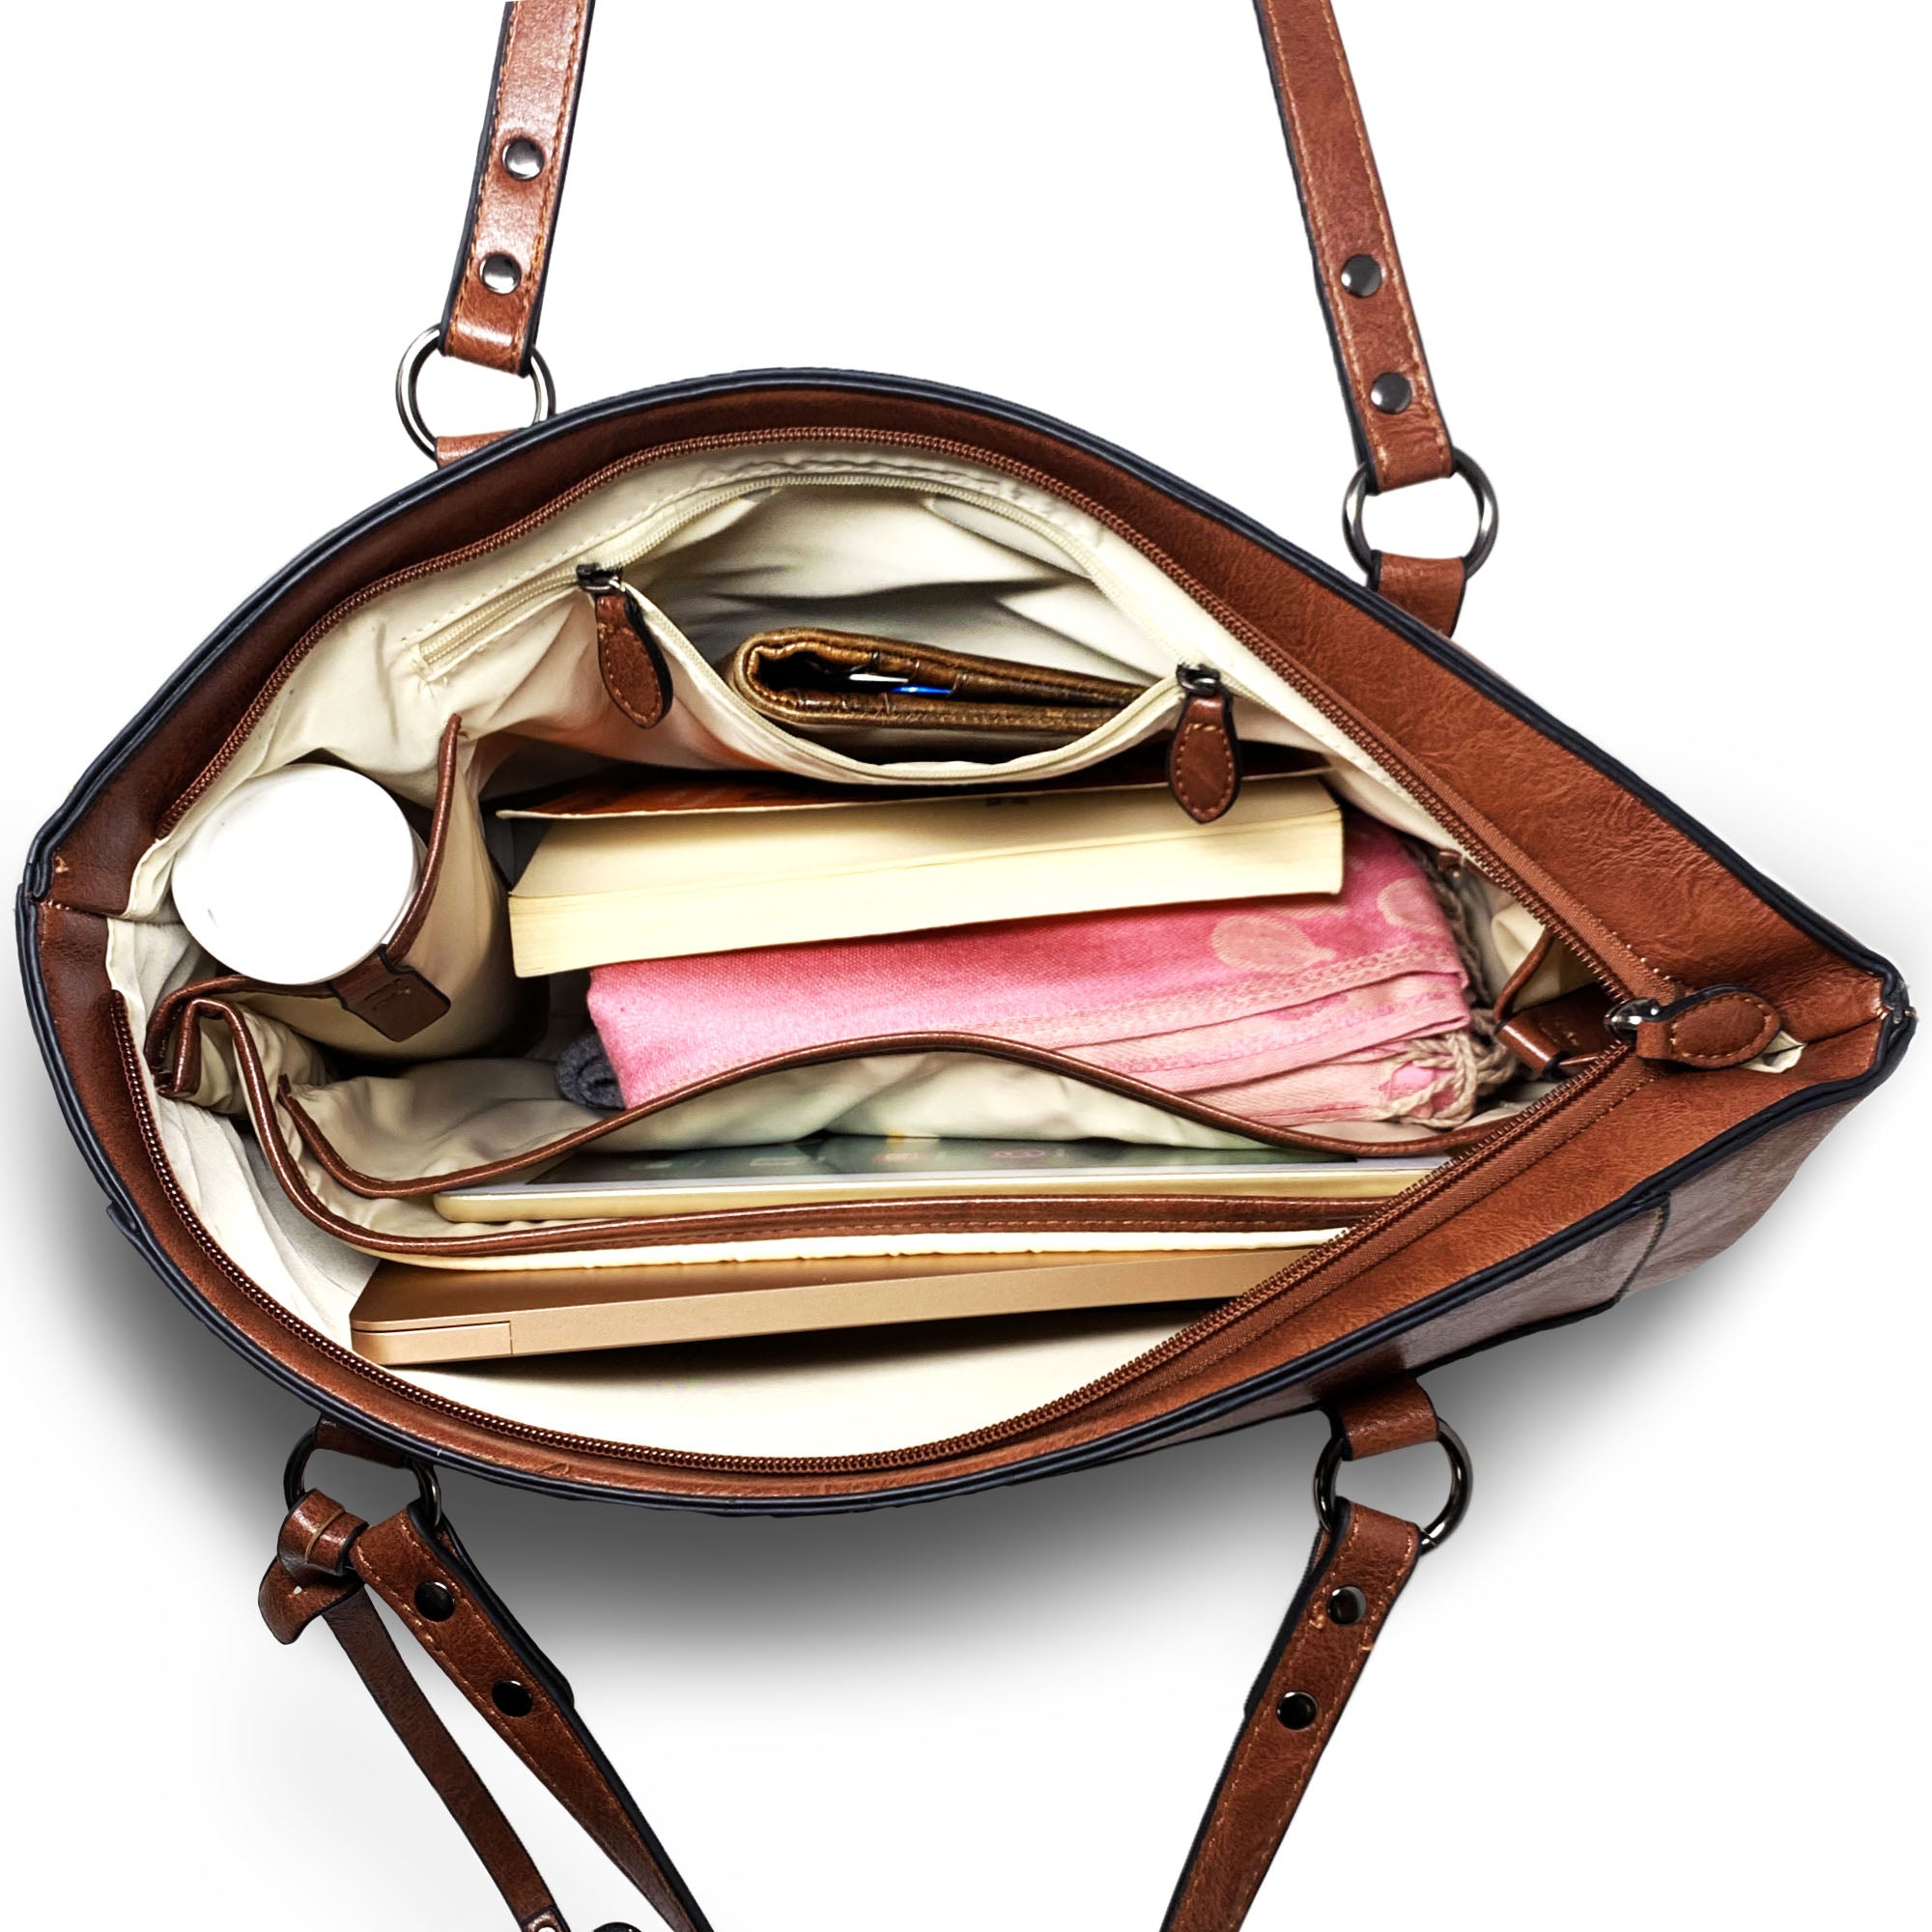 Rofozzi- City Crossbody Messenger Bag For Tablets with Casual Flap Satchel  (Eco-friendly) , Women's Designer Crossbody Bags , Leather Handbags 